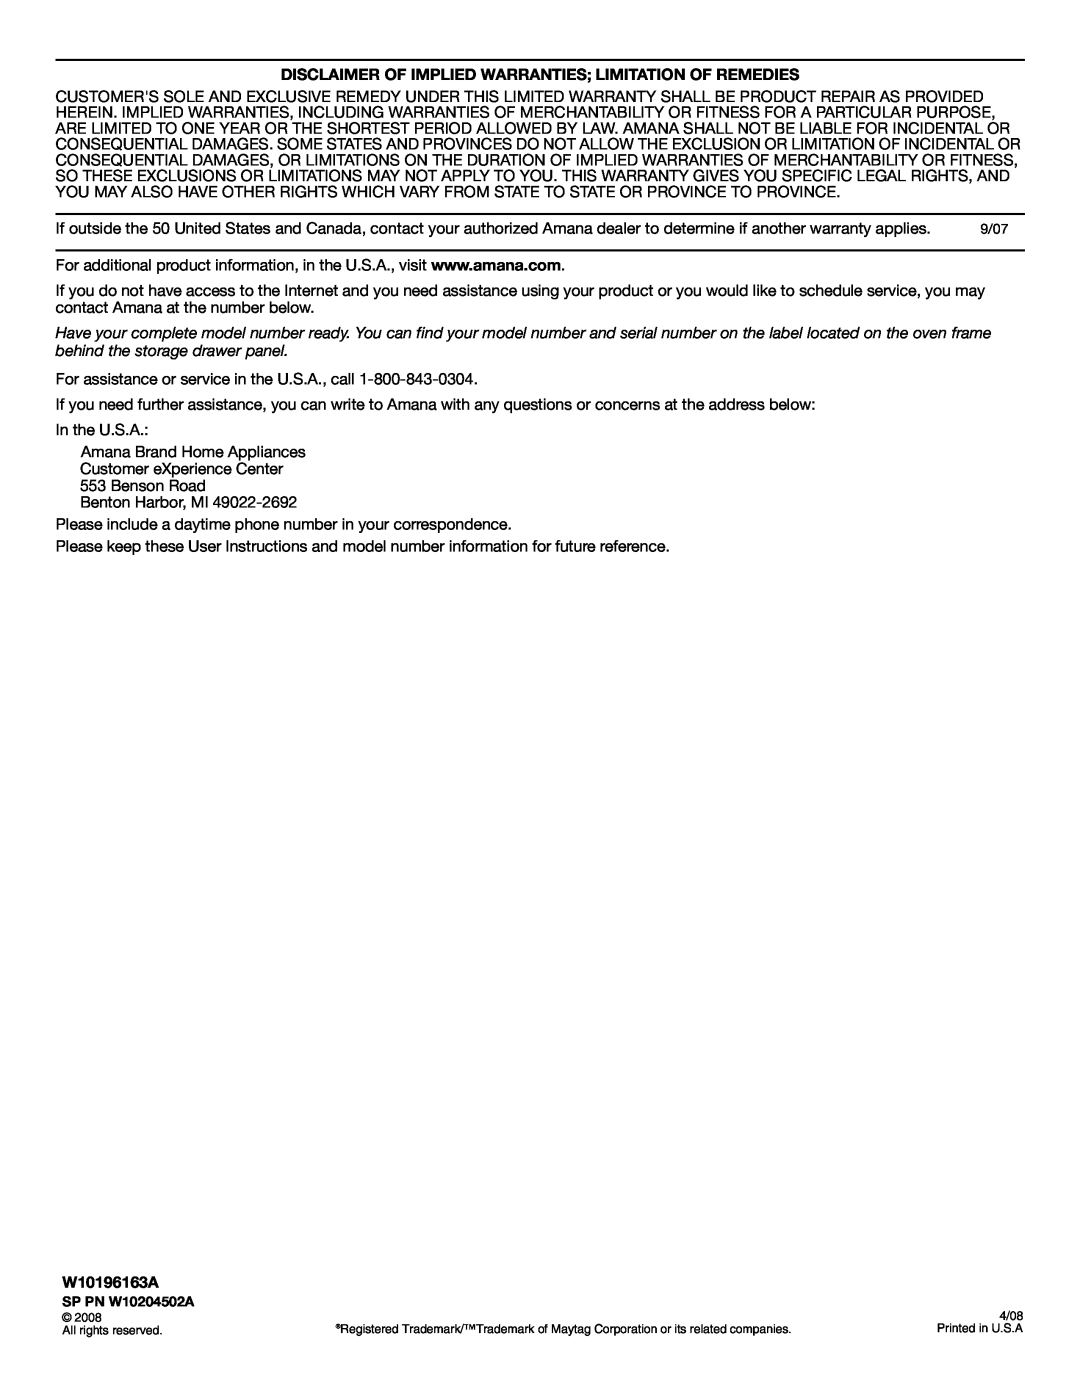 Amana AER5522VAW warranty Disclaimer Of Implied Warranties Limitation Of Remedies, W10196163A 